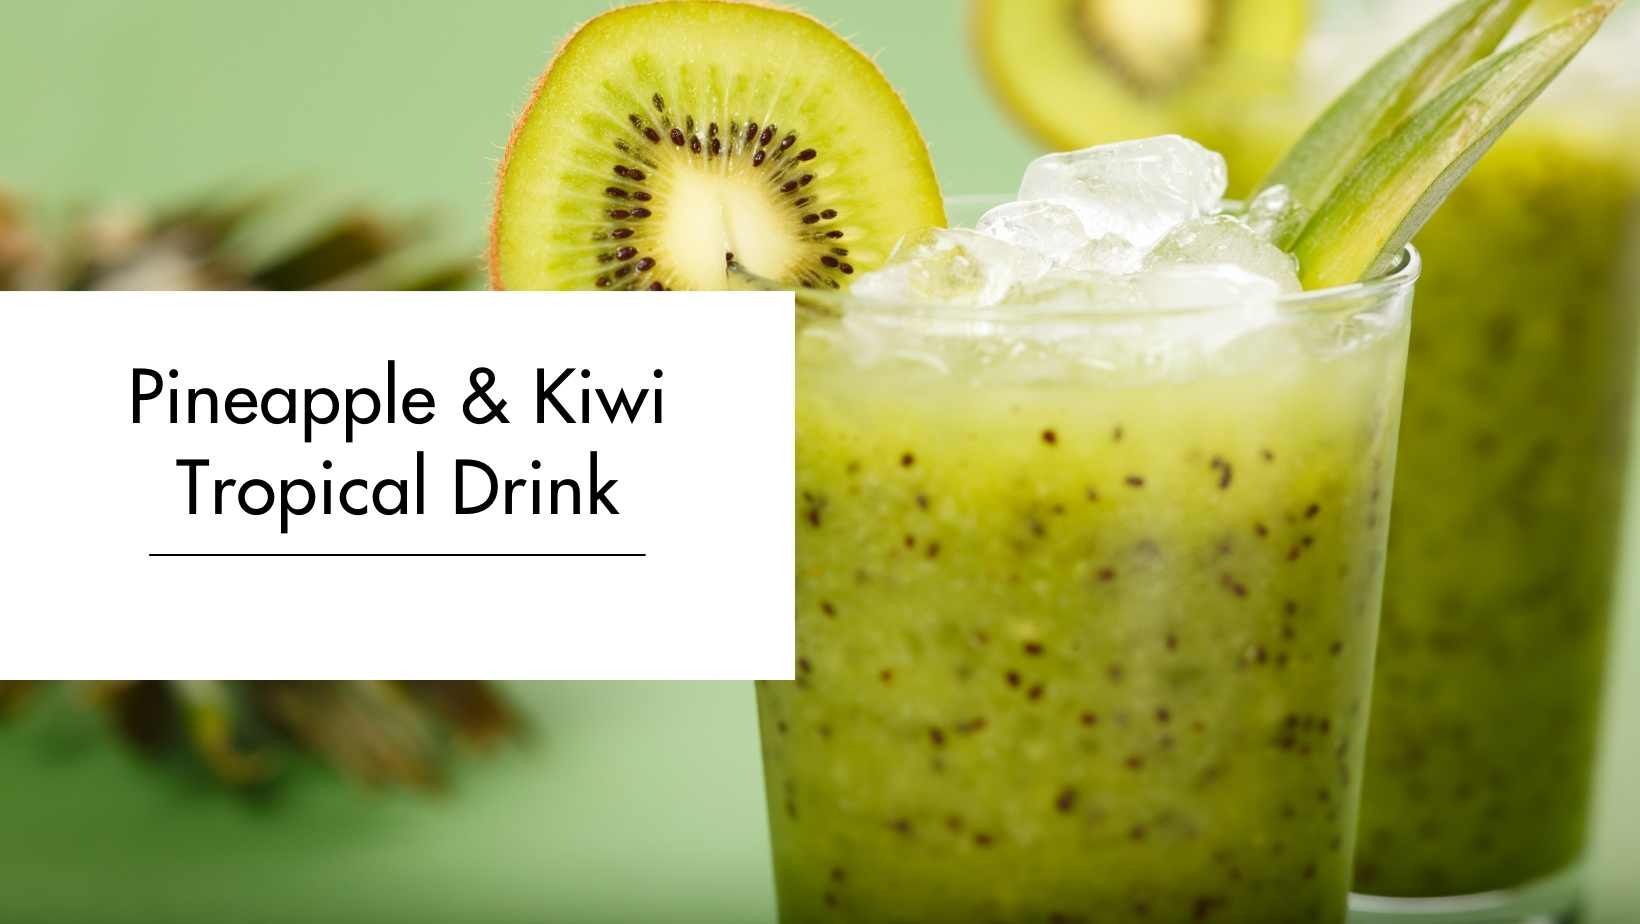 Pineapple & Kiwi Tropical Drink